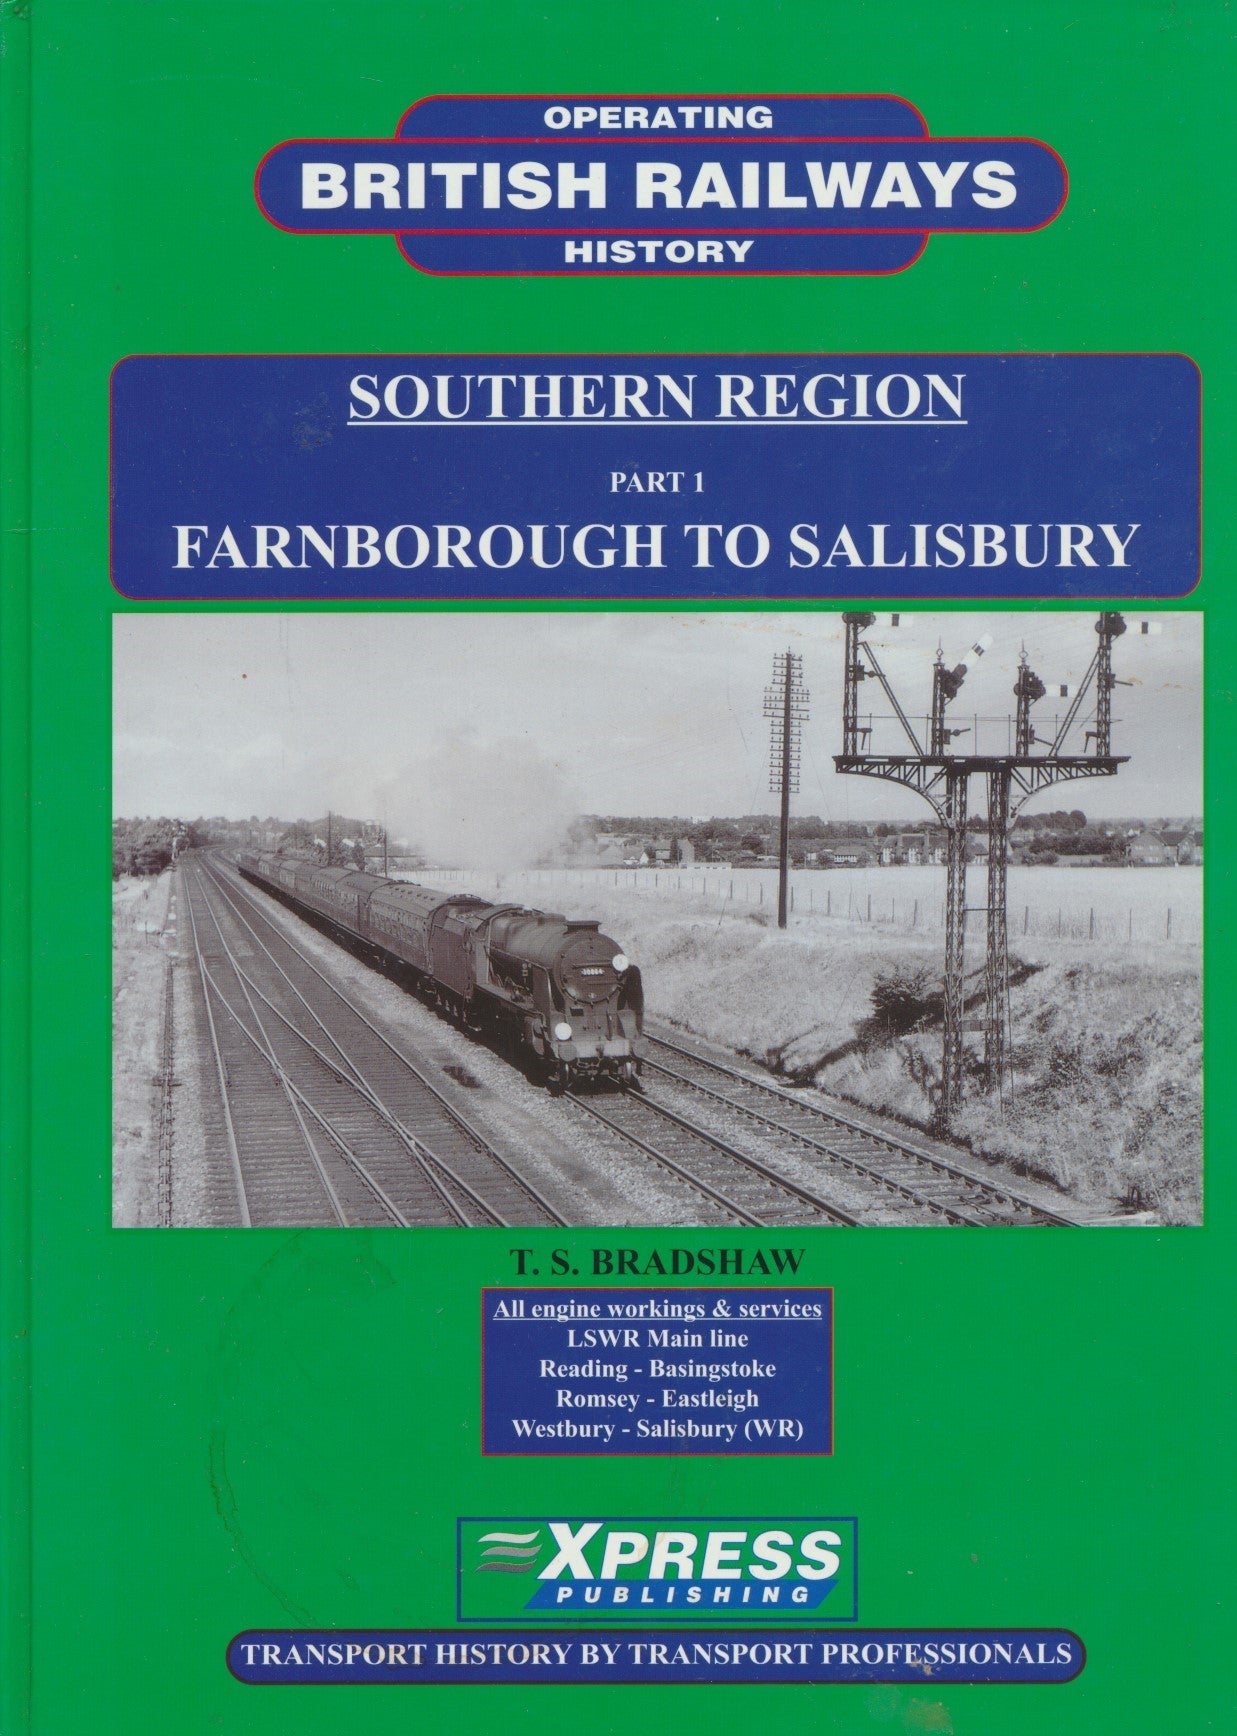 British Railways Operating History Southern Region, Part 1: Farnborough to Salisbury